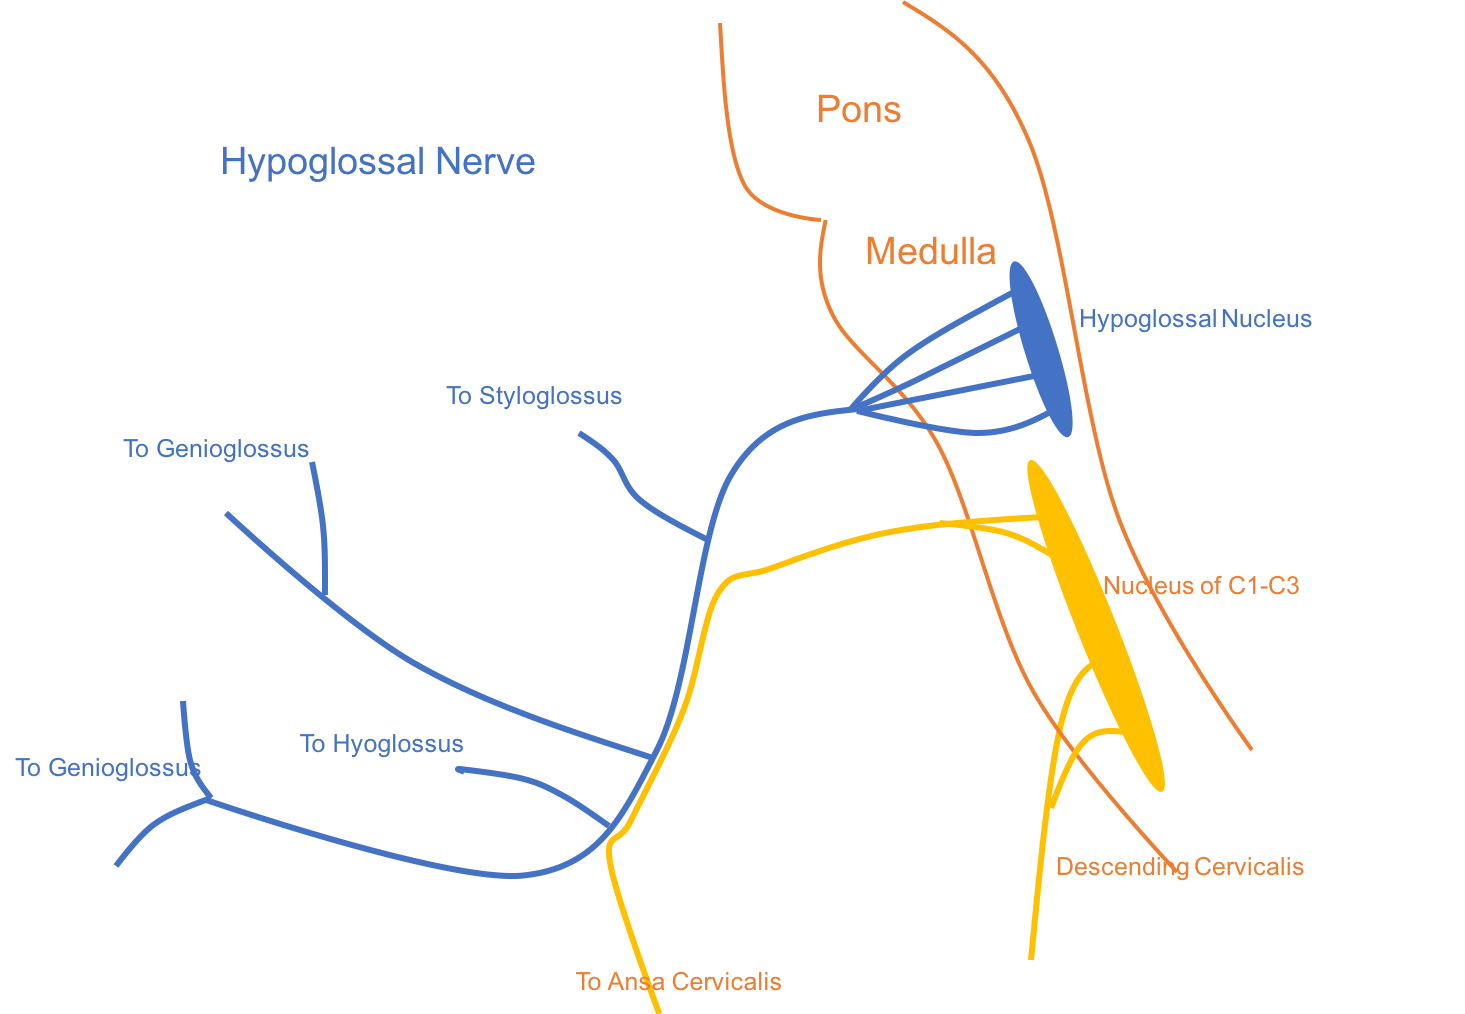 Figure 1: Hypoglossal Nerve Pathway/Anatomy